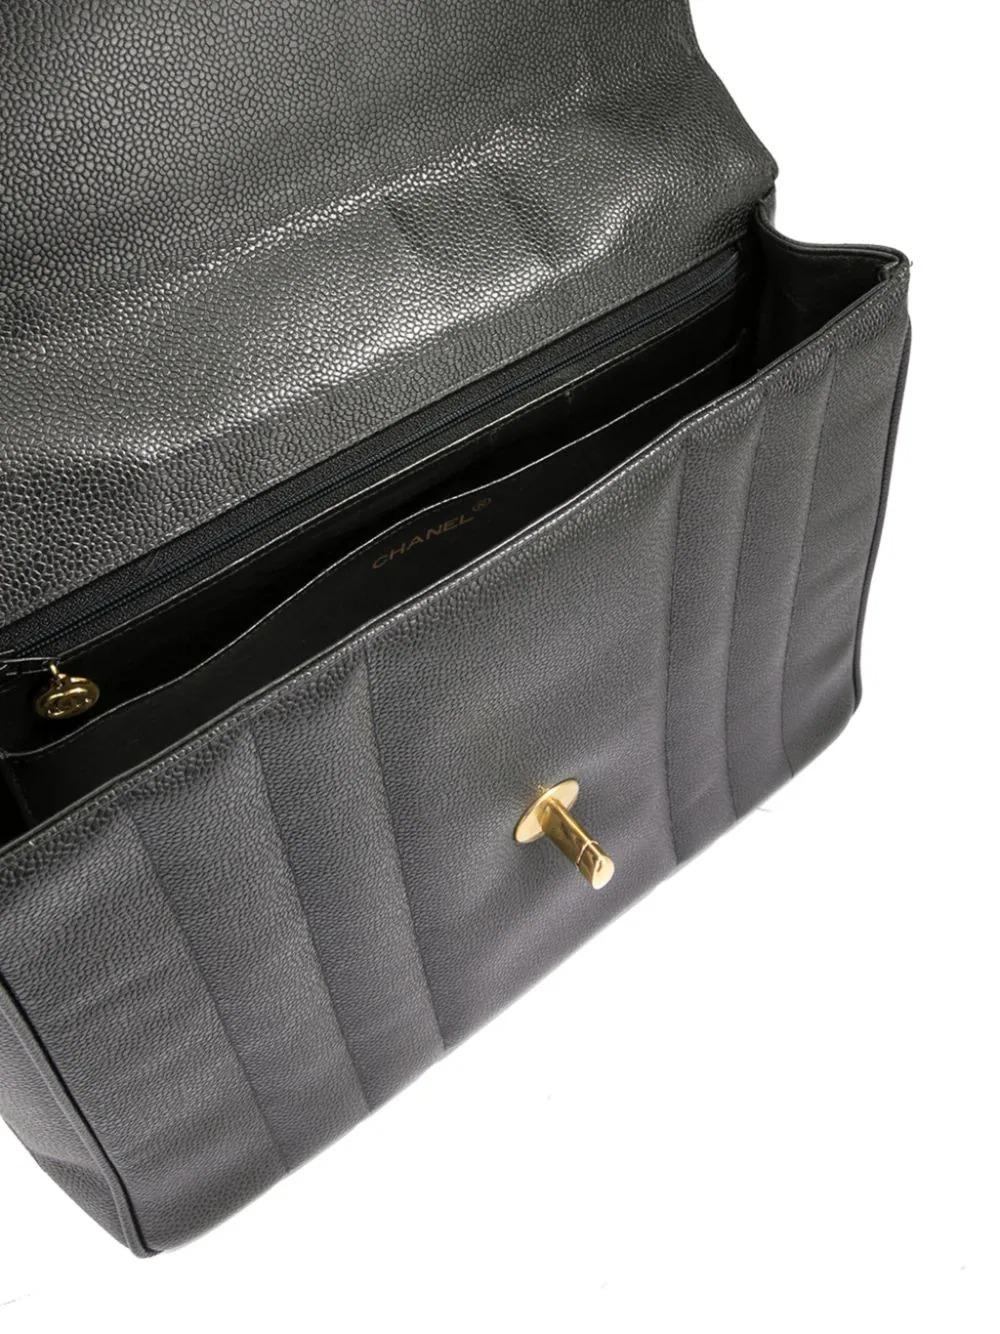 Chanel Vintage Rare Black Caviar Top Handle Classic Kelly Flap Bag For Sale 2